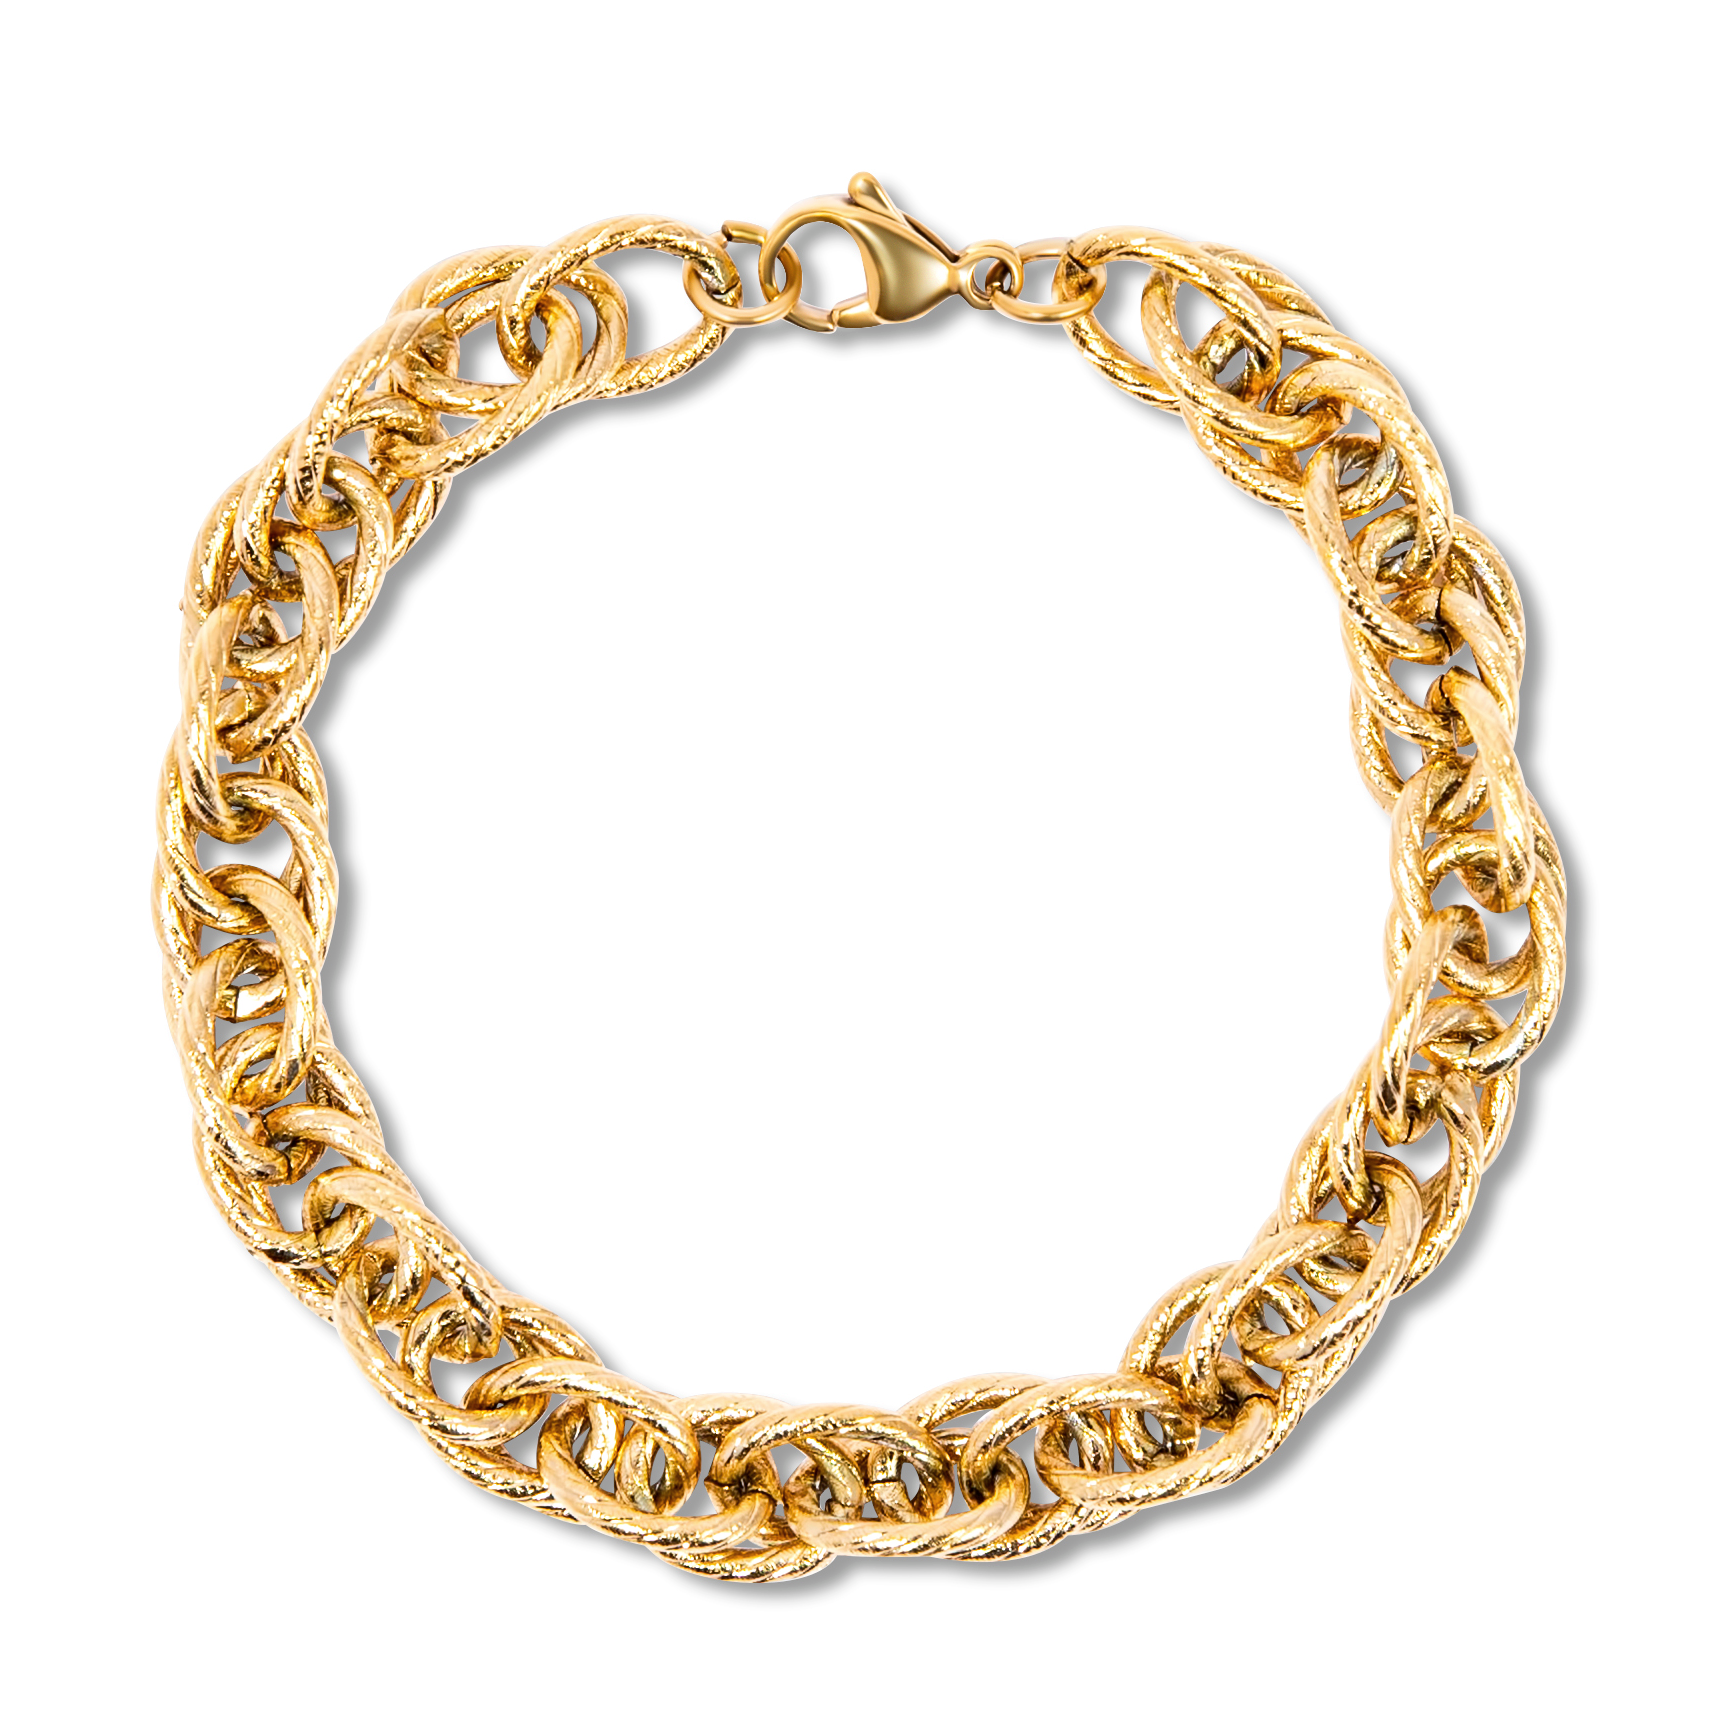 Ellie Vail Jewelry - Ellie Vail - Dixie Chunky Twist Chain Bracelet